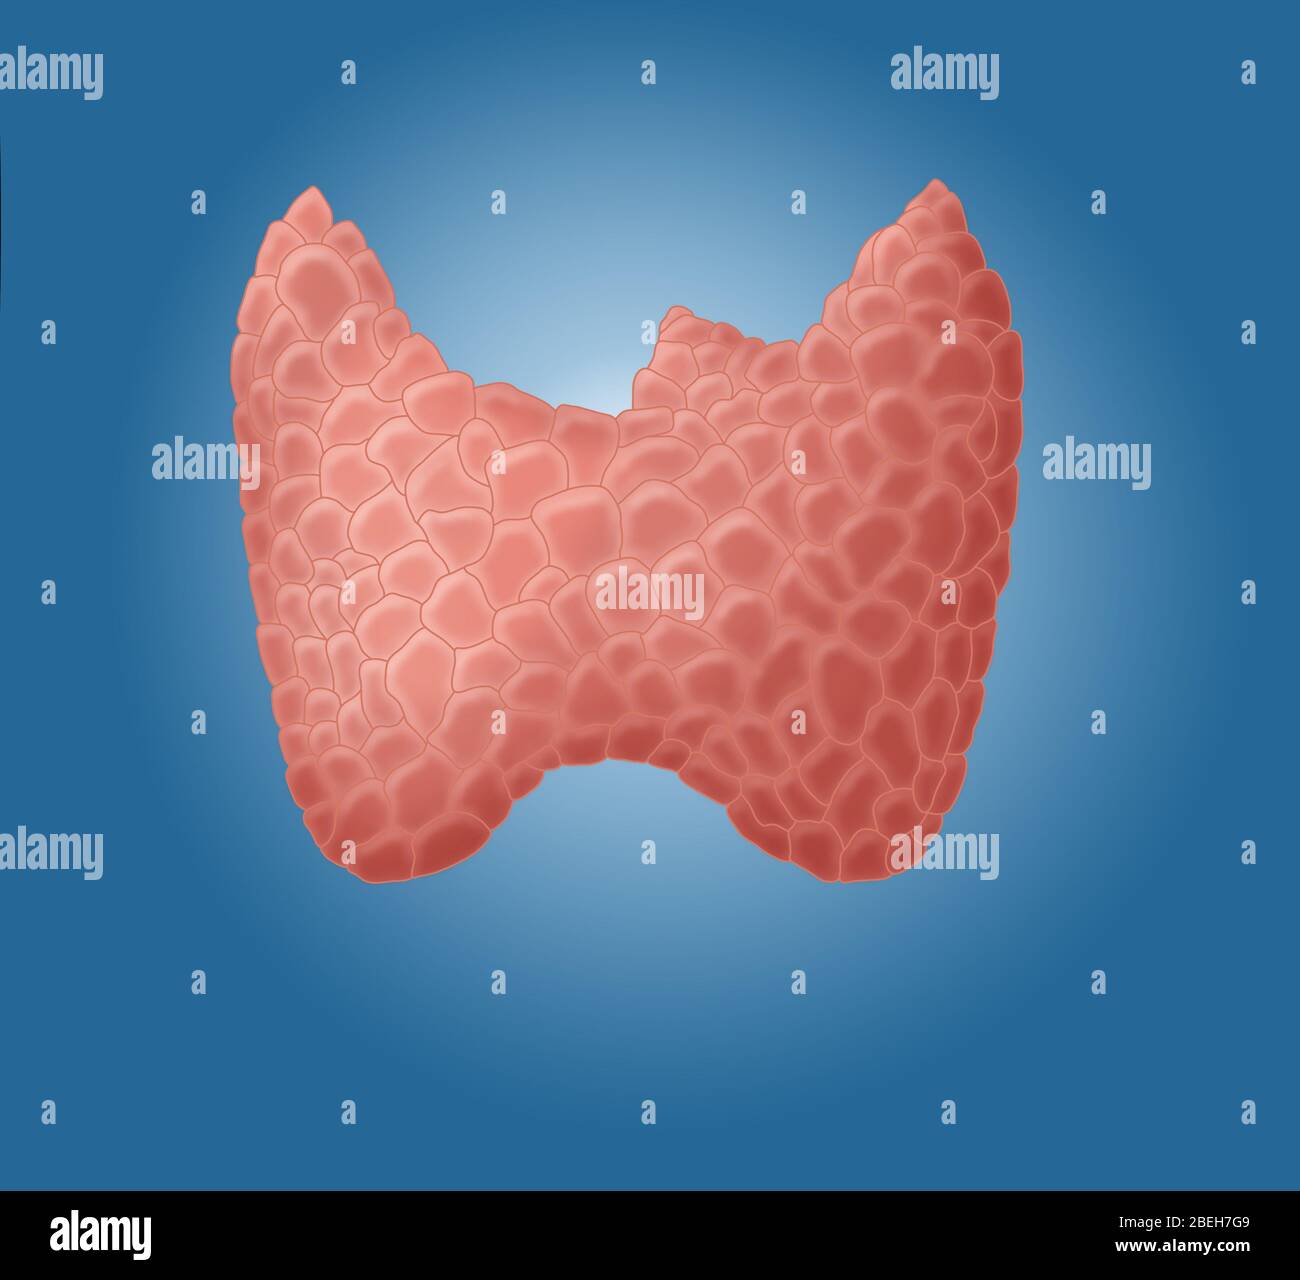 Anatomical illustration of the thyroid gland. Stock Photo